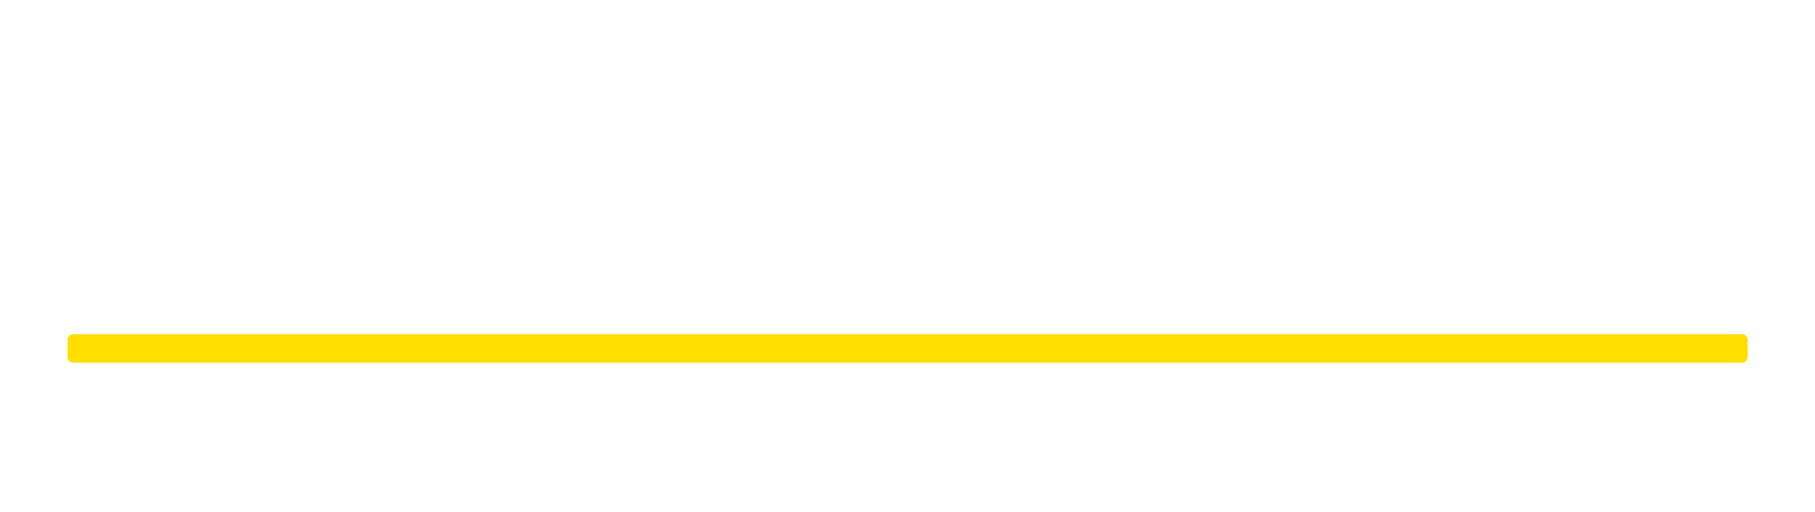 https://nikon-slm-solutions.com/logo512.png